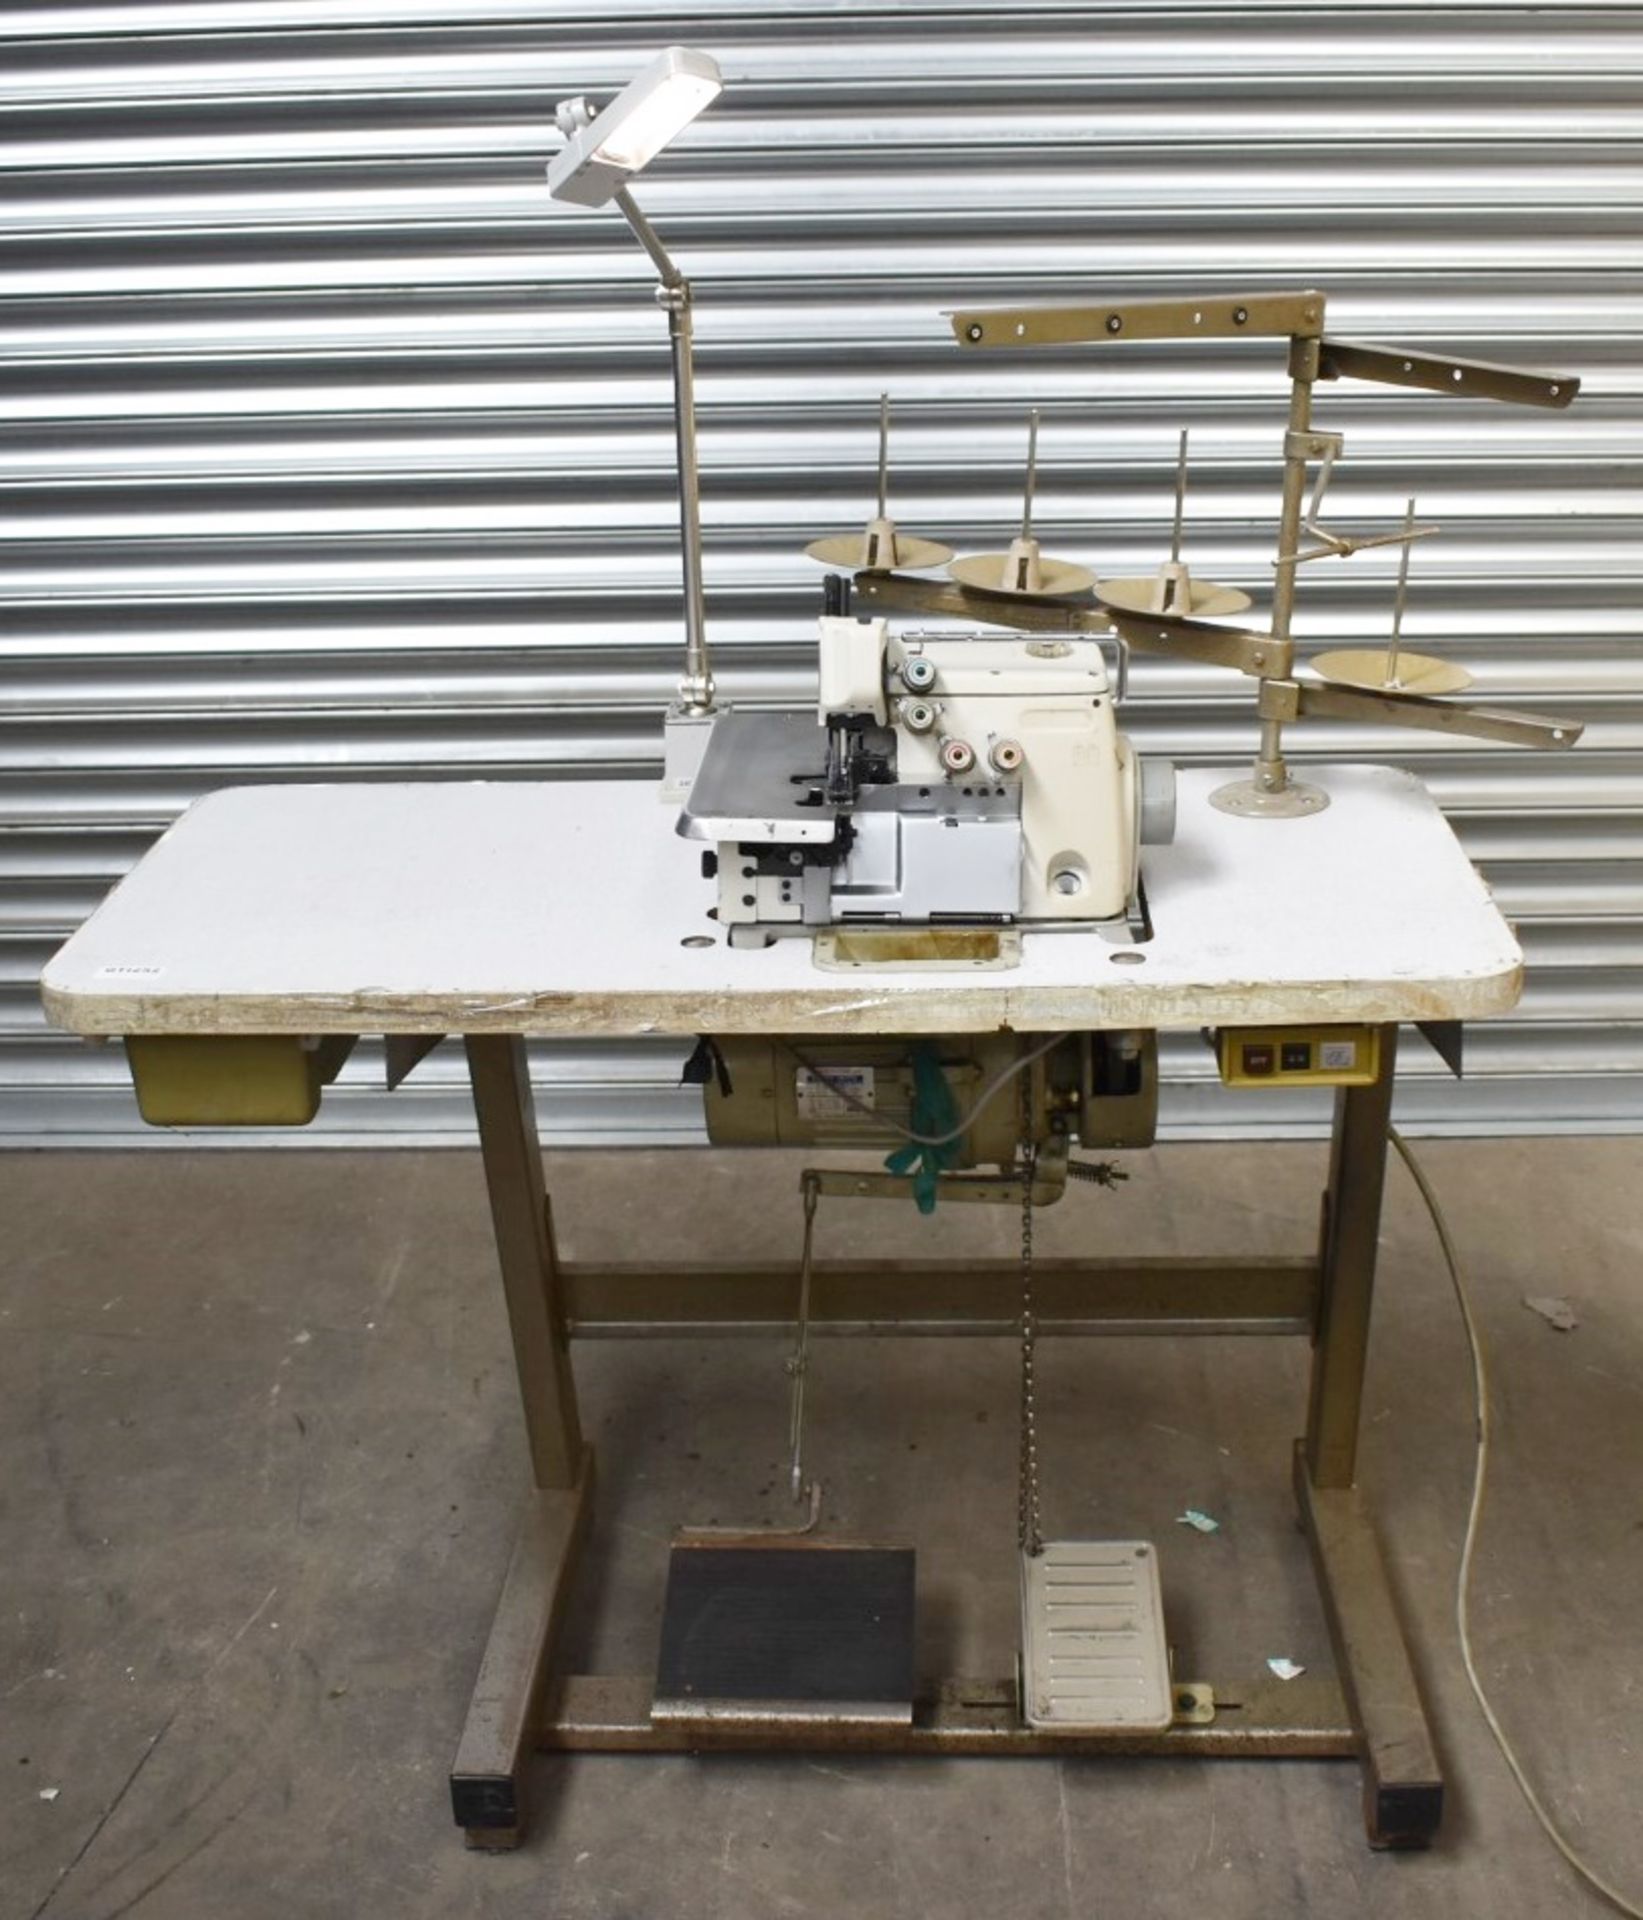 1 x Brother Overlock Industrial Sewing Machine - Model EF4-B531